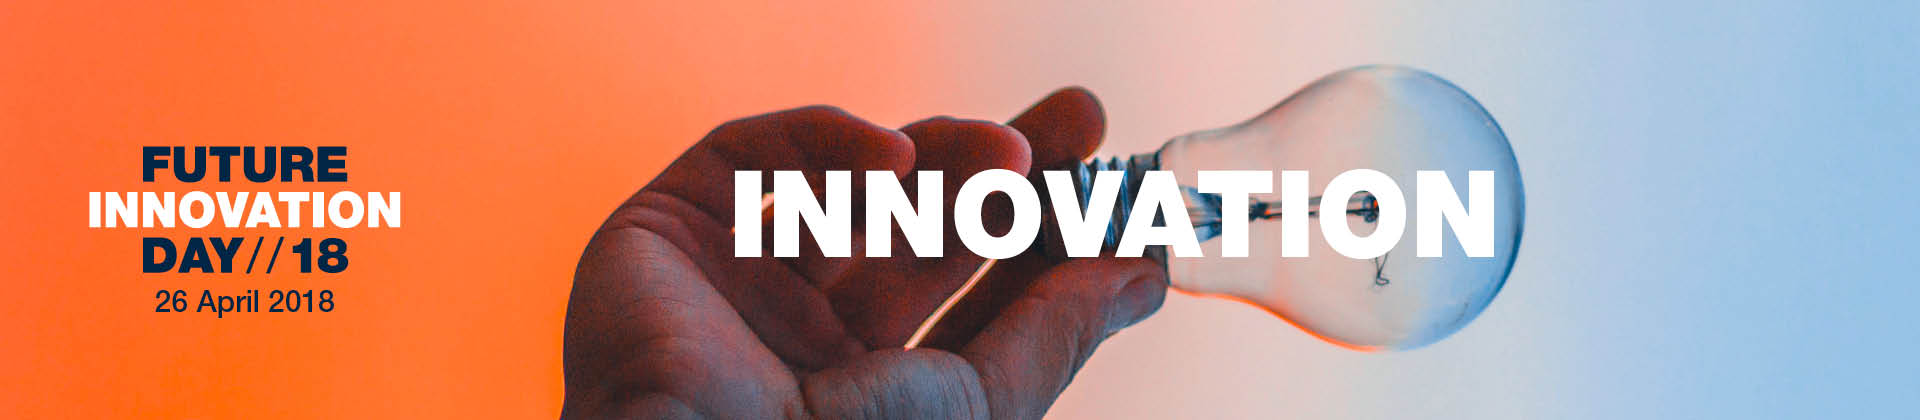 Future Innovation Project - INNOVATION